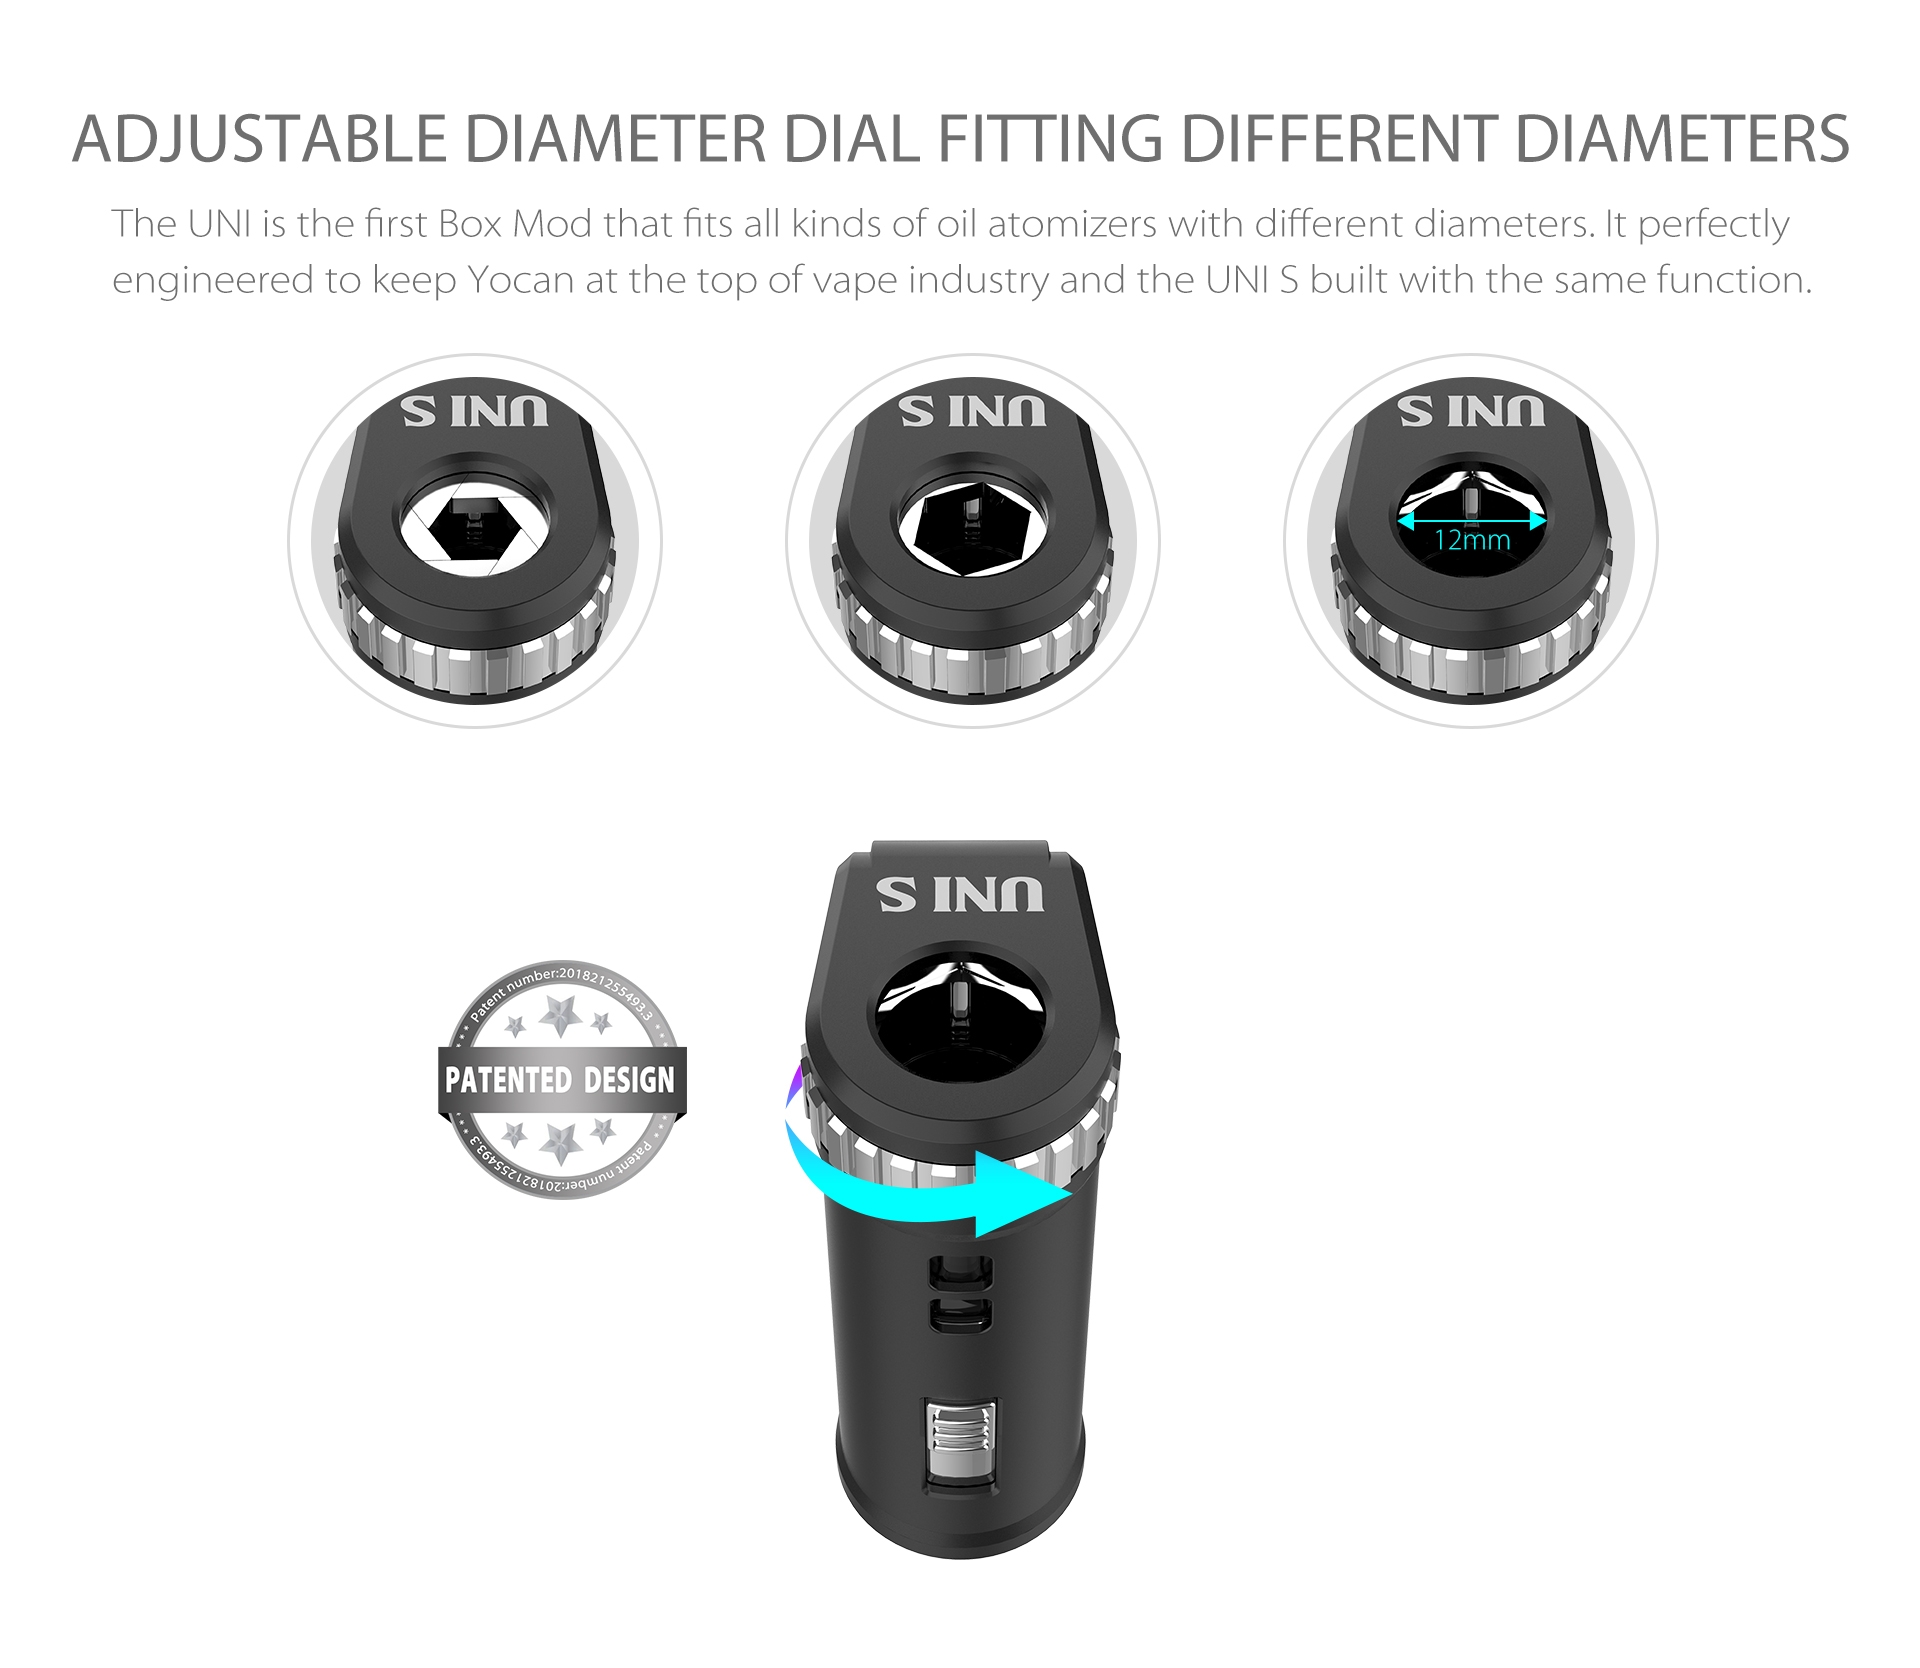 Yocan UNI S - Adjustable Diameter Dial